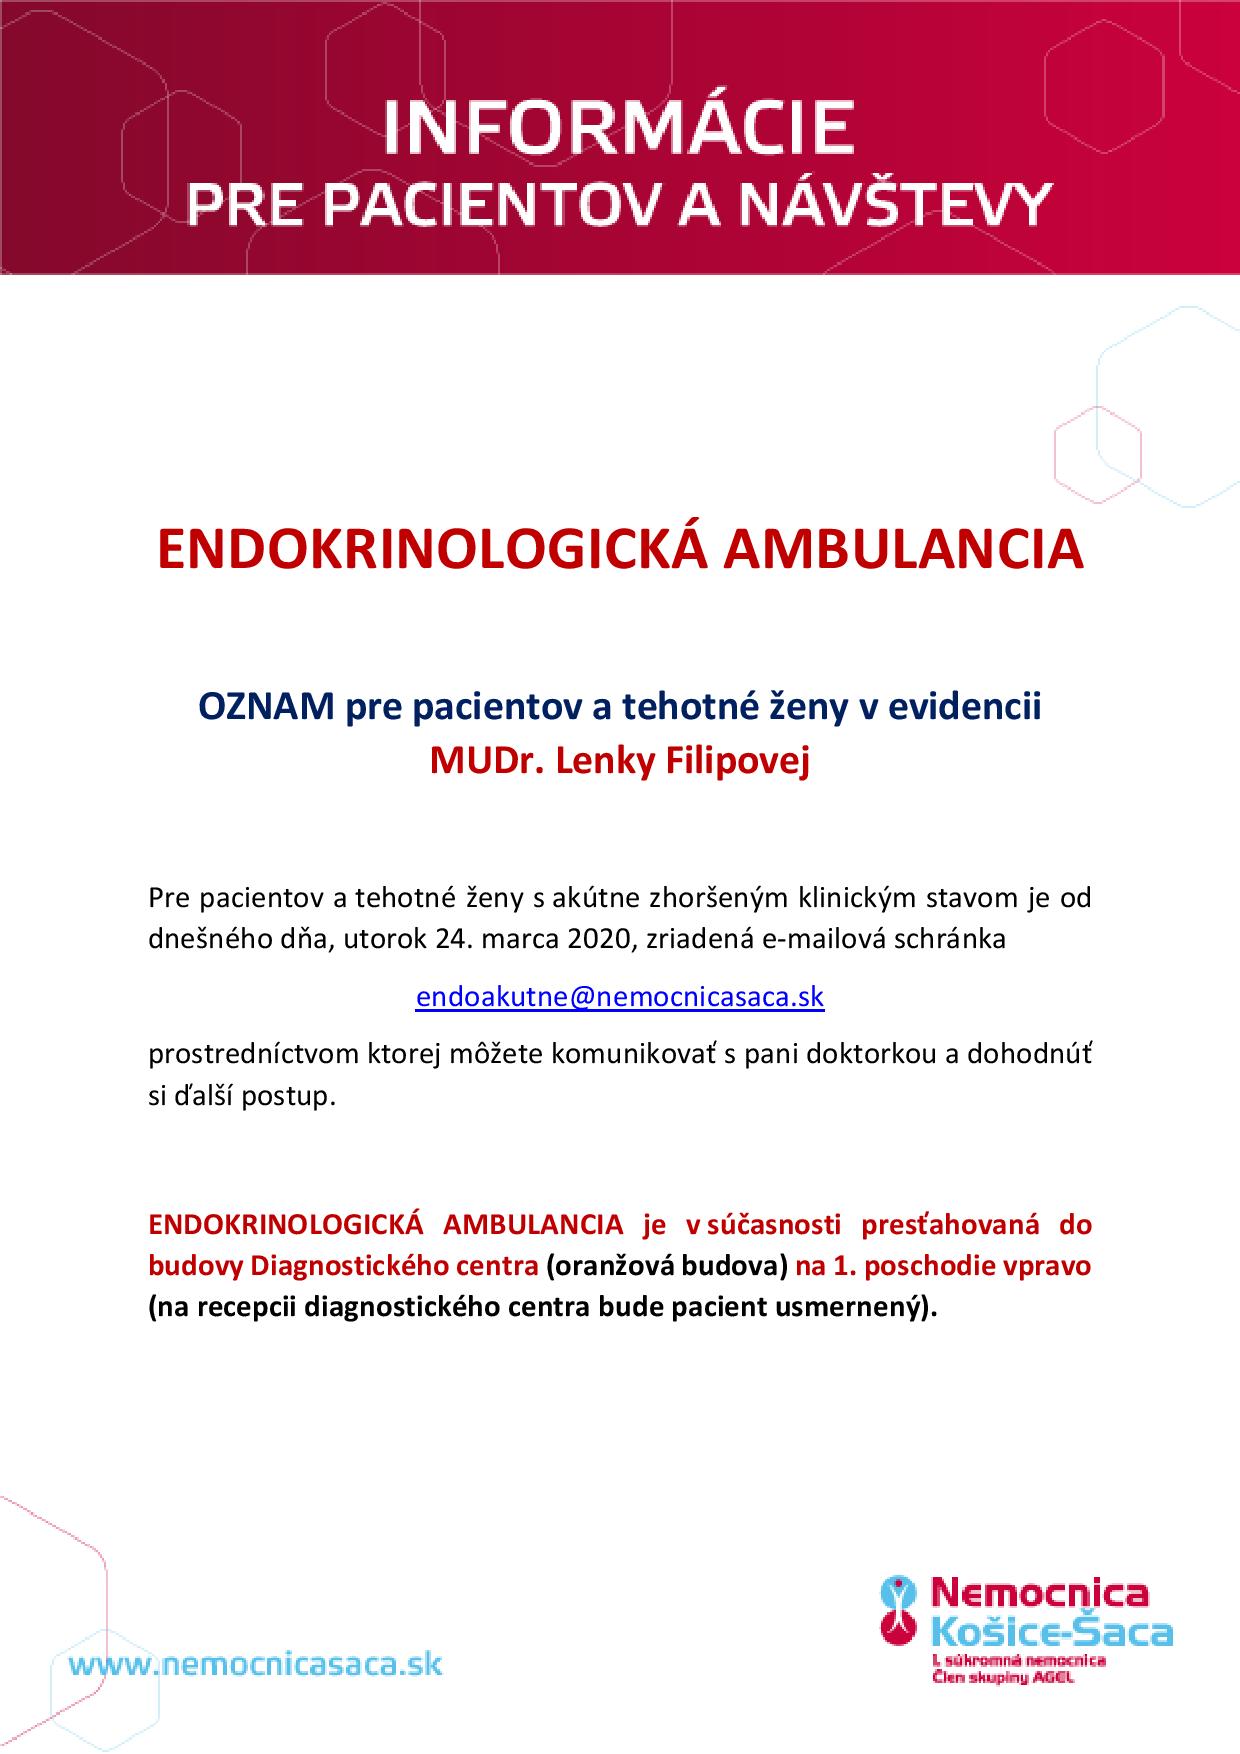 Endokrinologická ambulancia